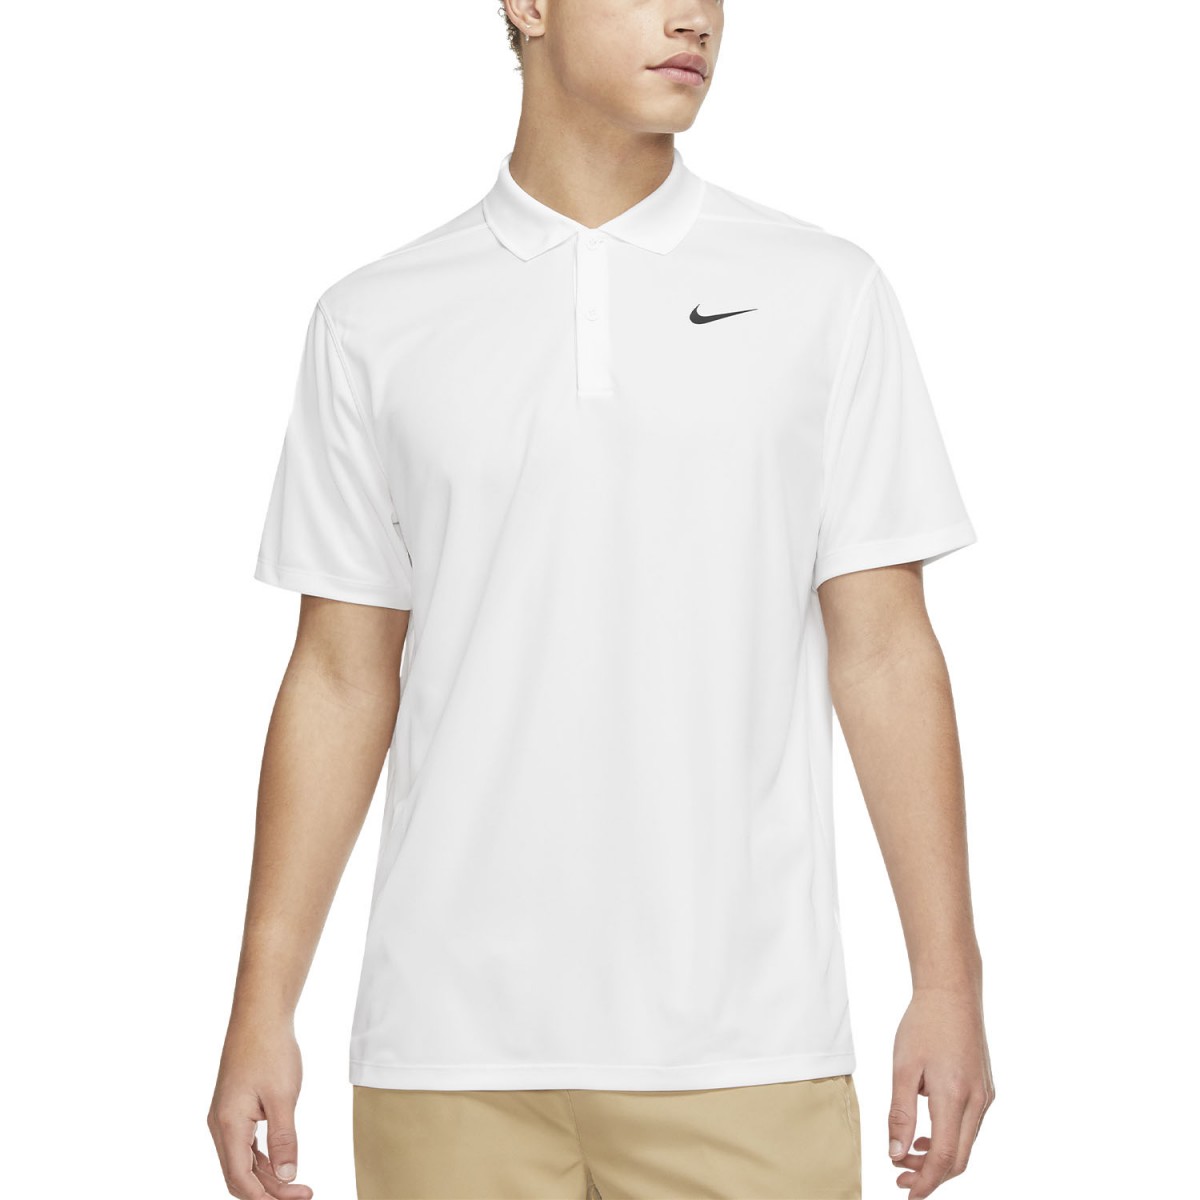 Теннисная футболка мужская Nike Core Pique Polo white/black